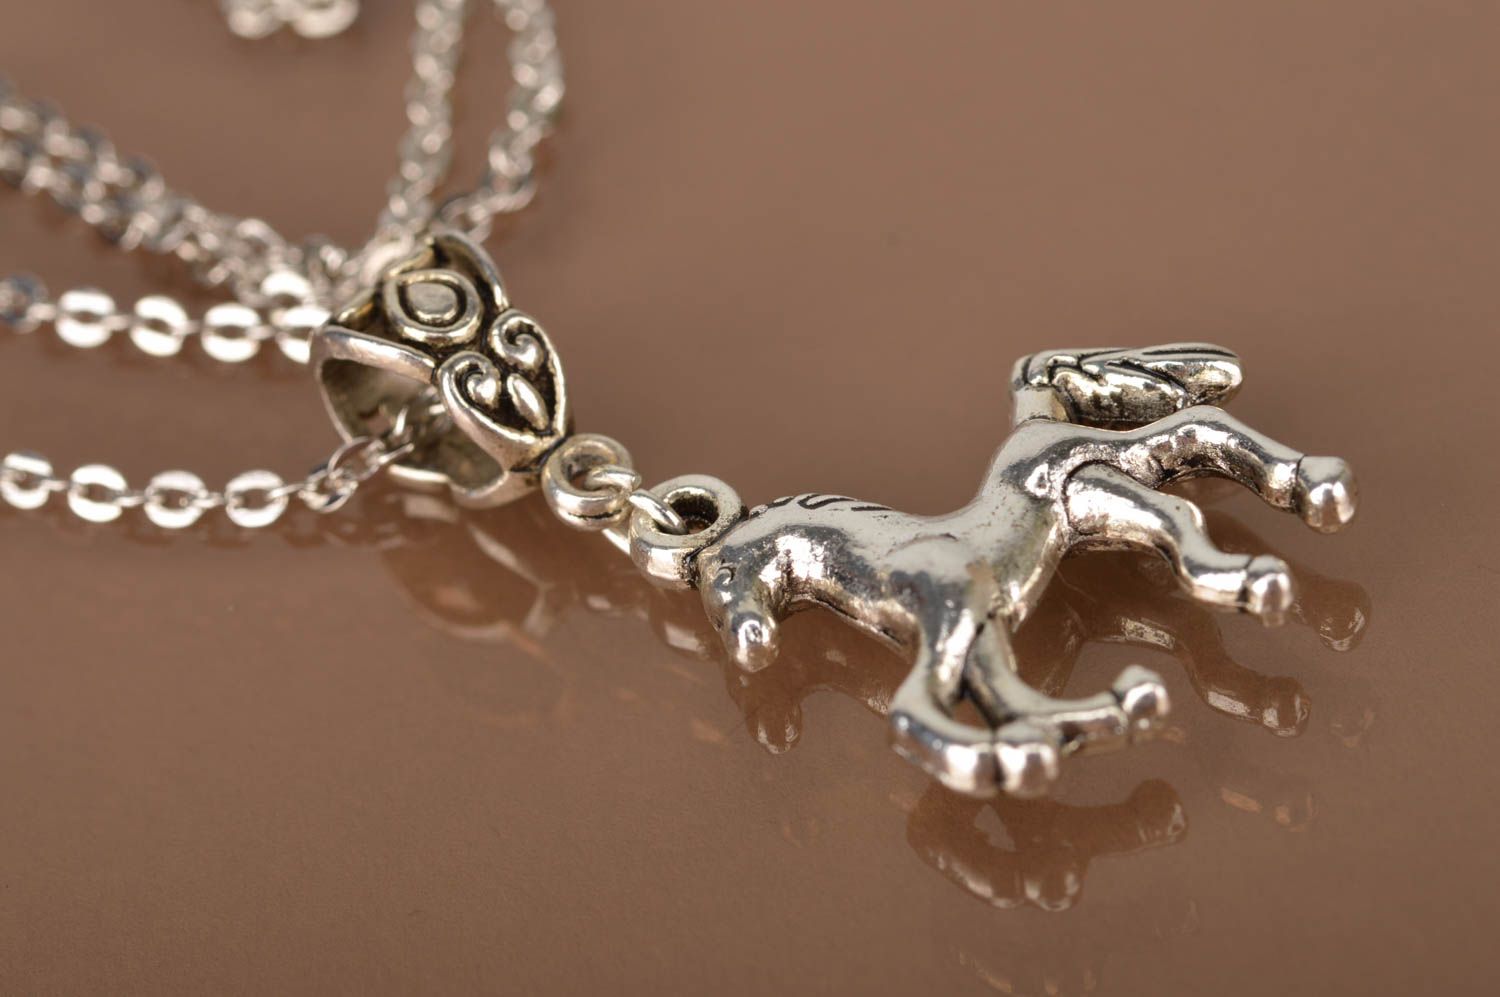 Unusual handmade metal pendant horse designer accessories for girls gift ideas photo 4